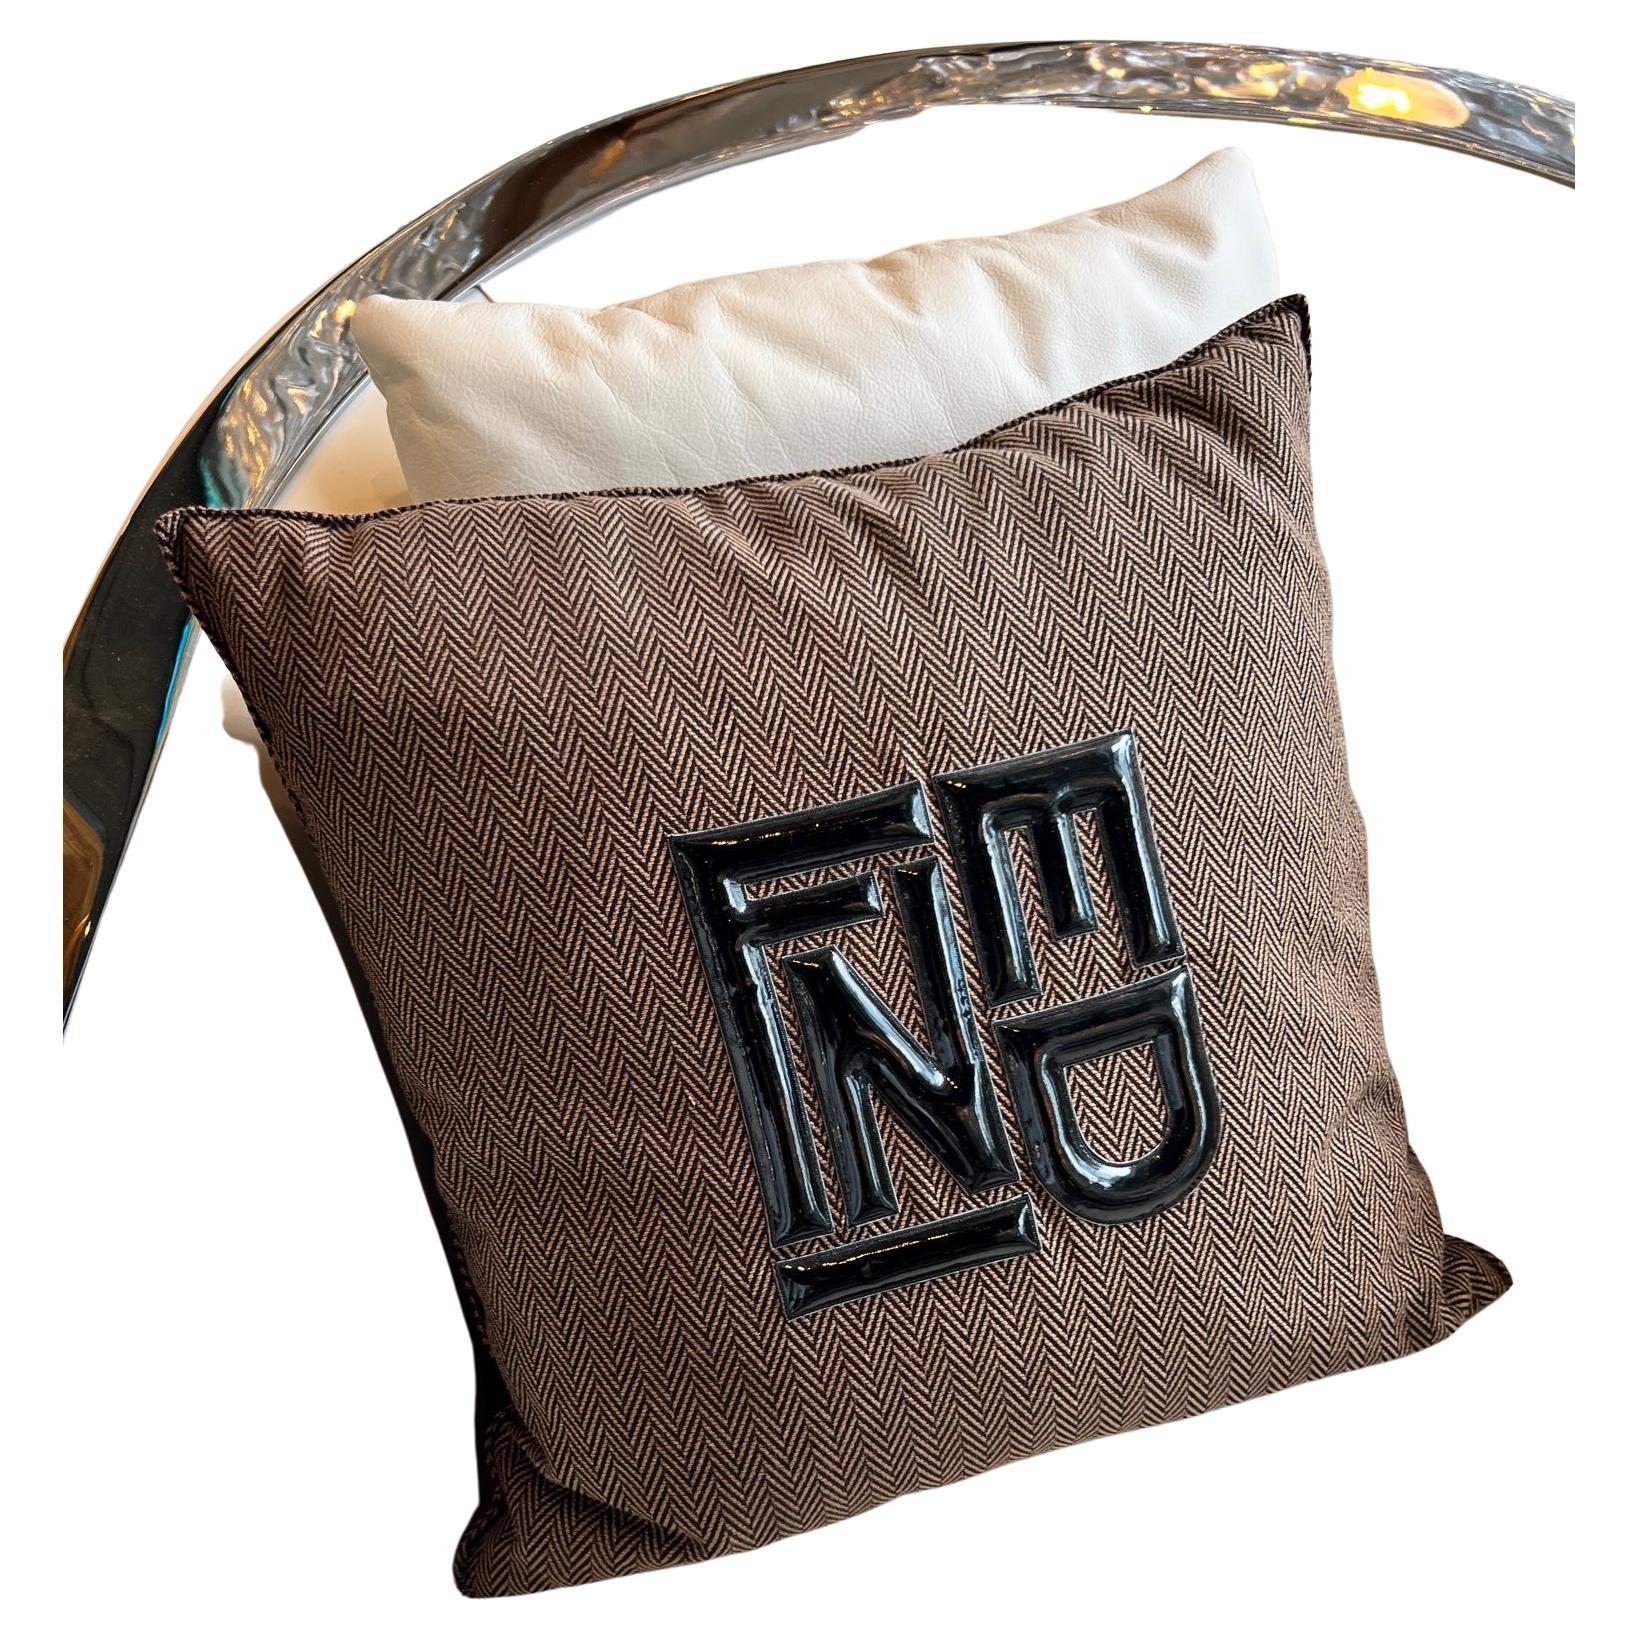 Fendi Casa fabric chevron pillow with patent leather Fendi logo For Sale